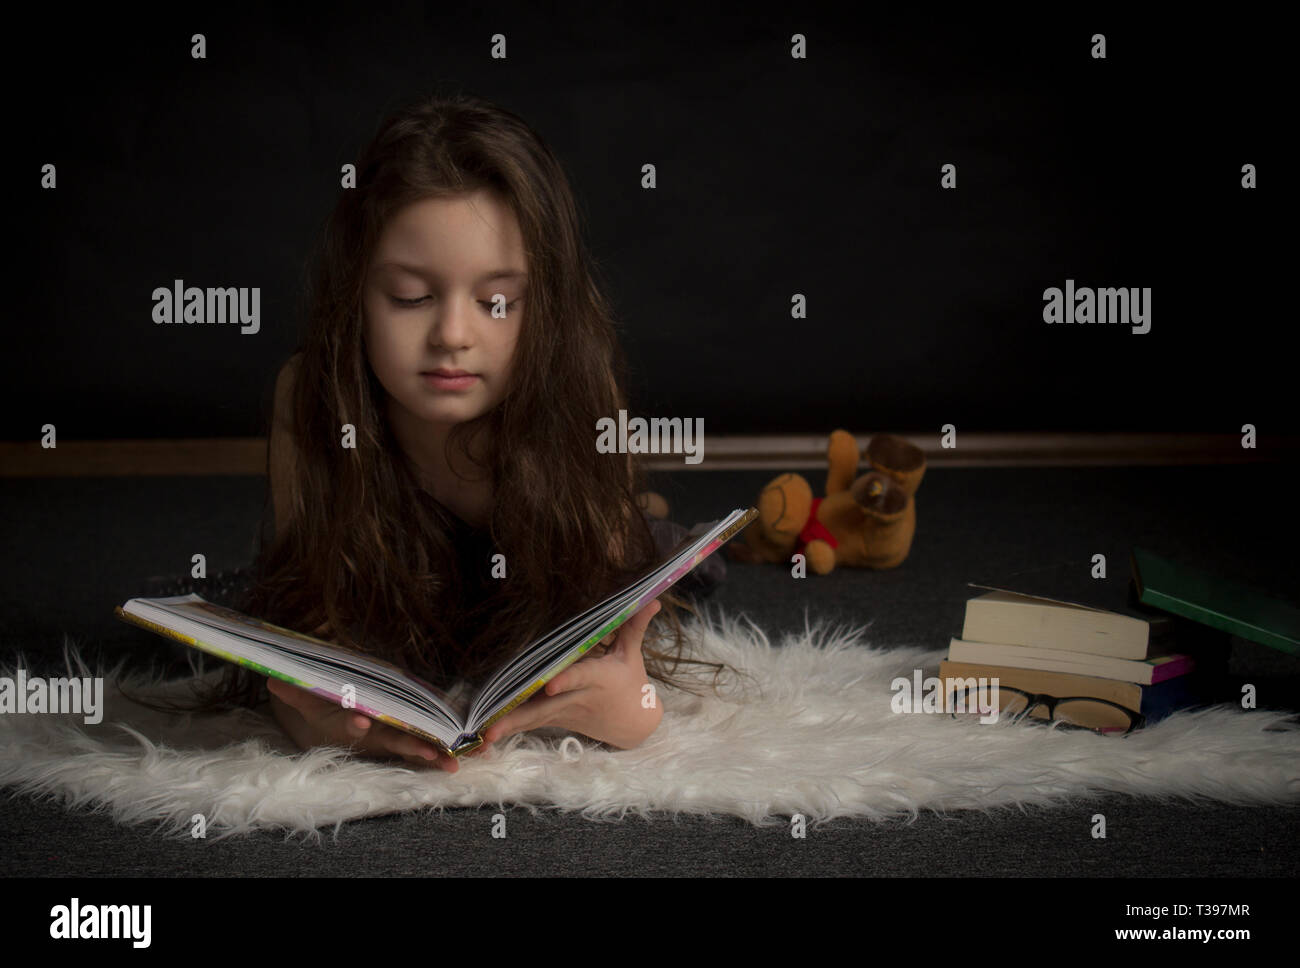 Longhair little girl reading a book in a dark room. Stock Photo